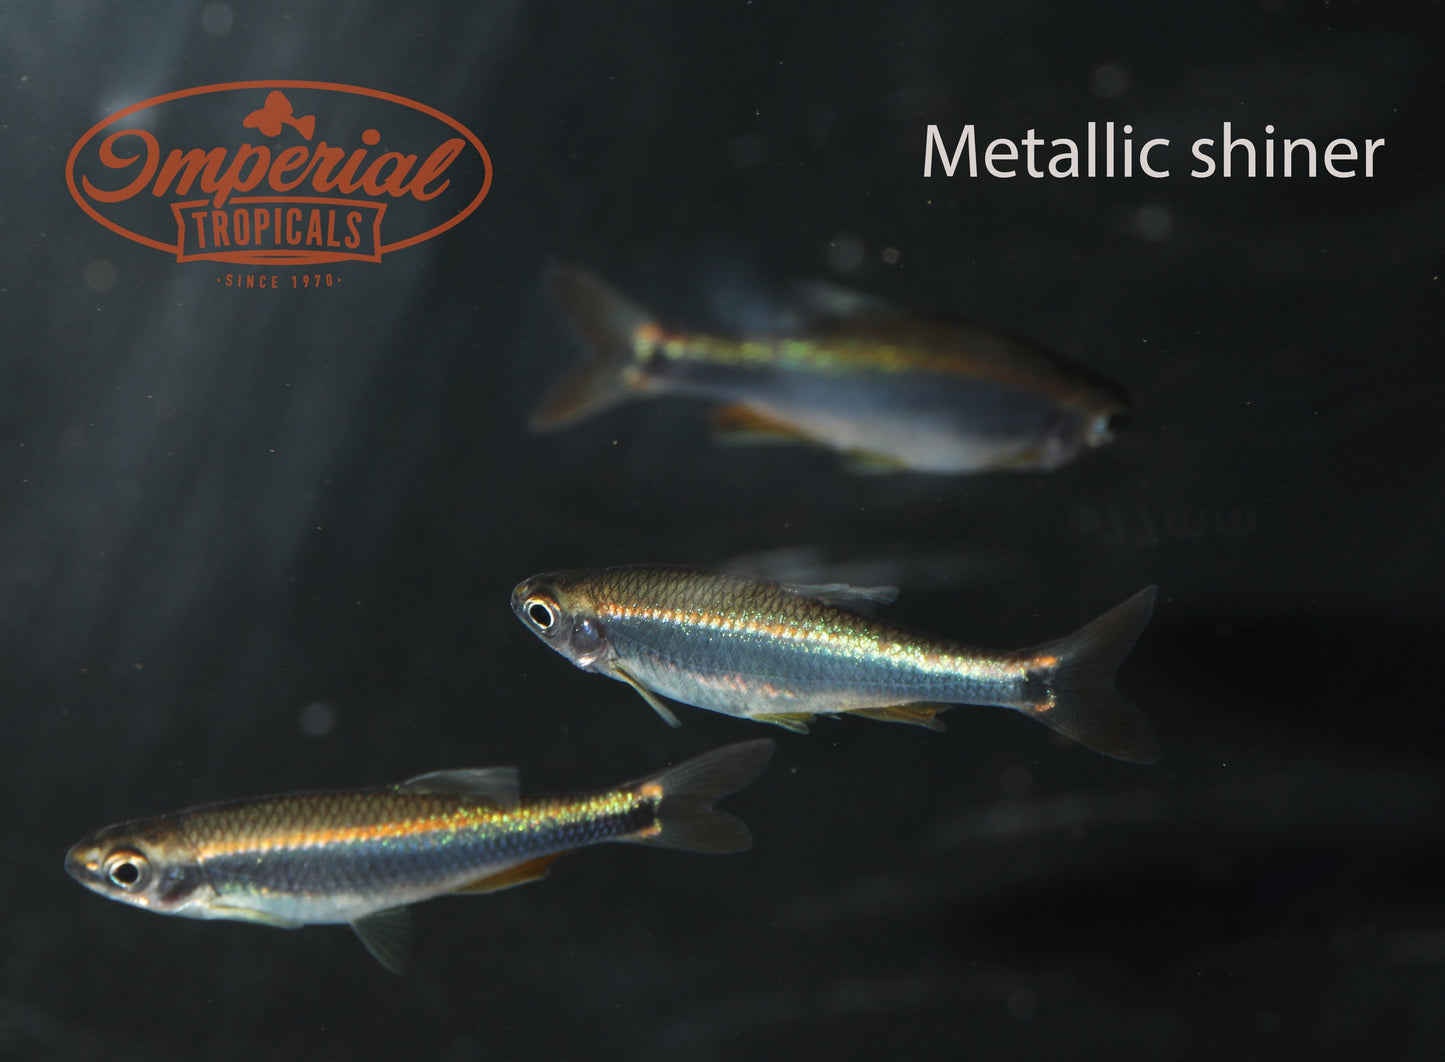 Metallic Shiner (Pteronotropis metallicus) - Imperial Tropicals